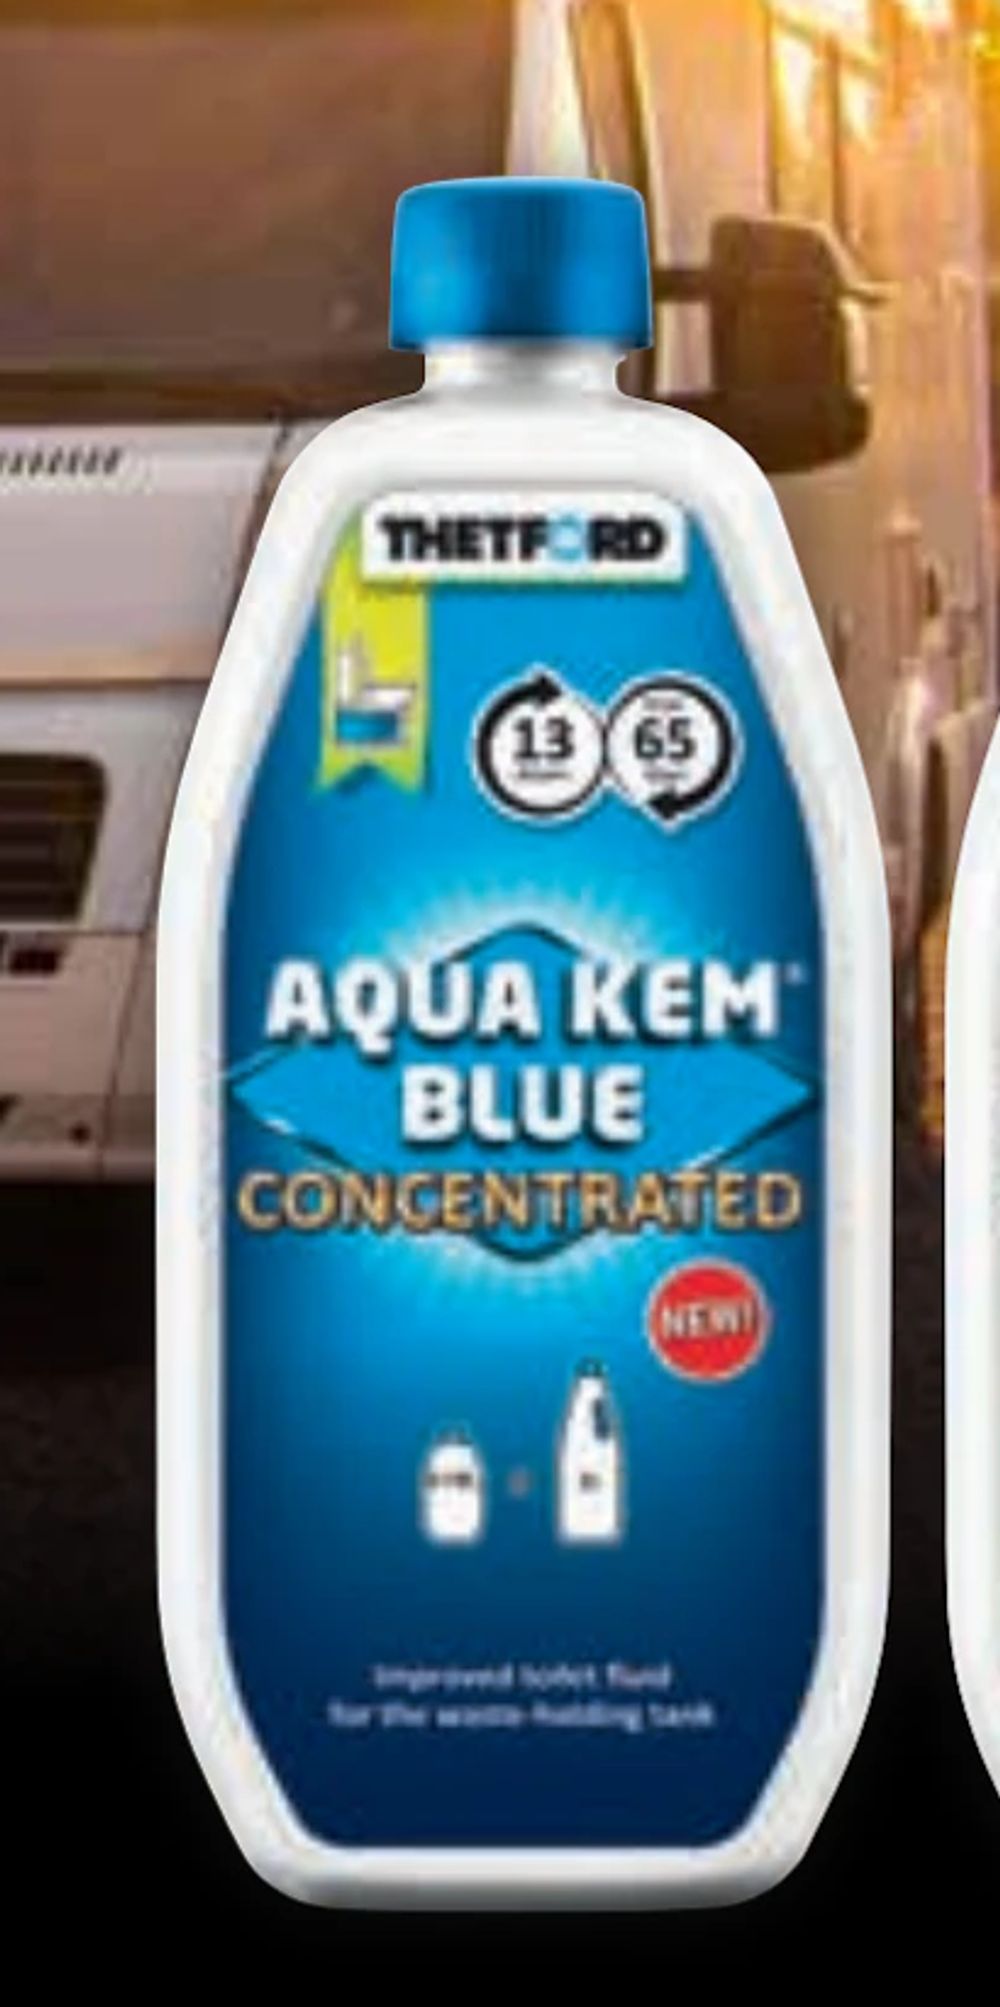 Tilbud på Aqua Kem Blue-koncentrat fra CITTI til 119,99 kr.